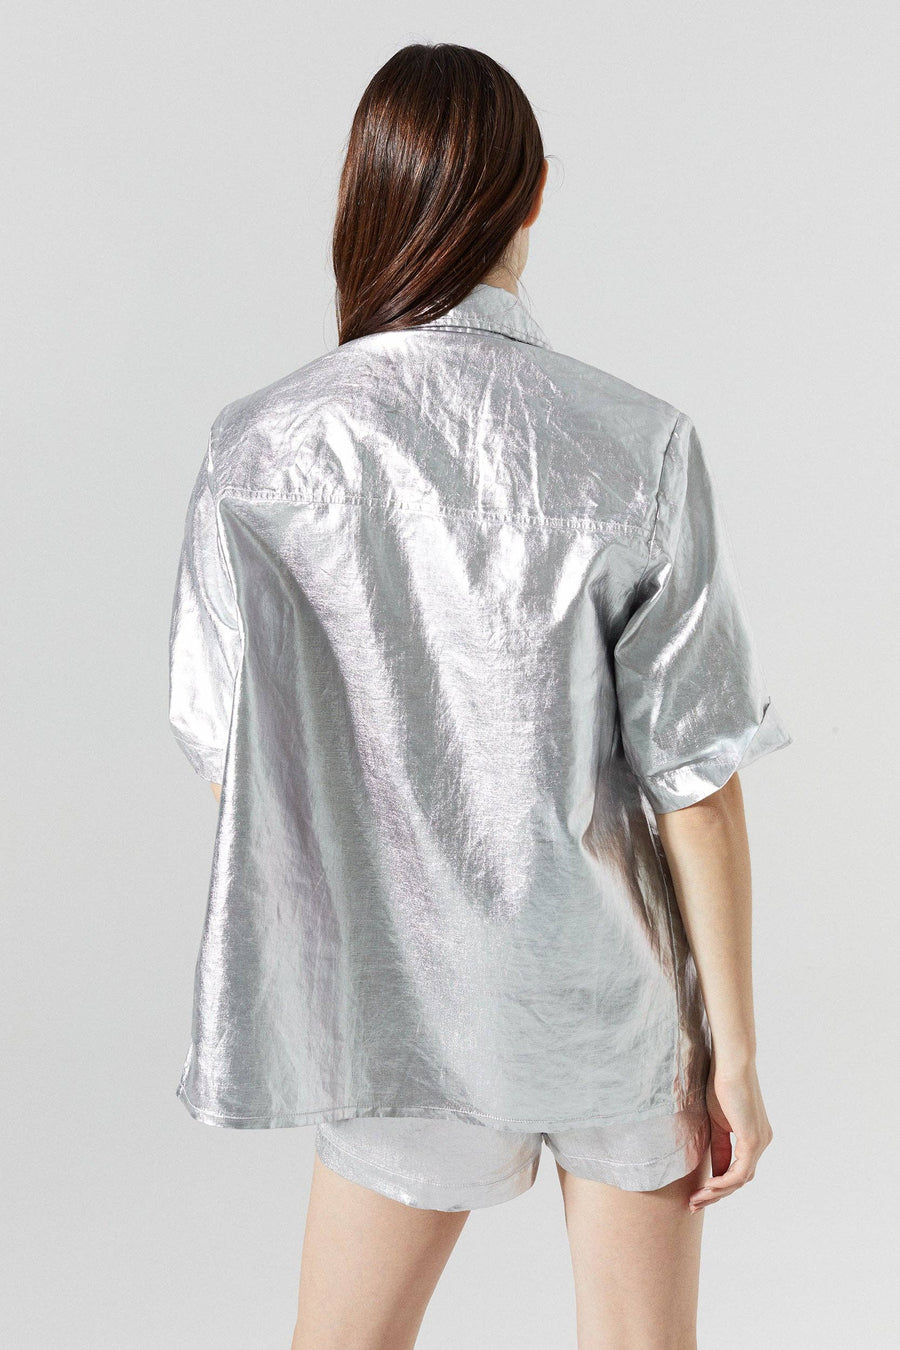 Soho Metallic Linen Shirt in Metallic Silver by Lanhtropy